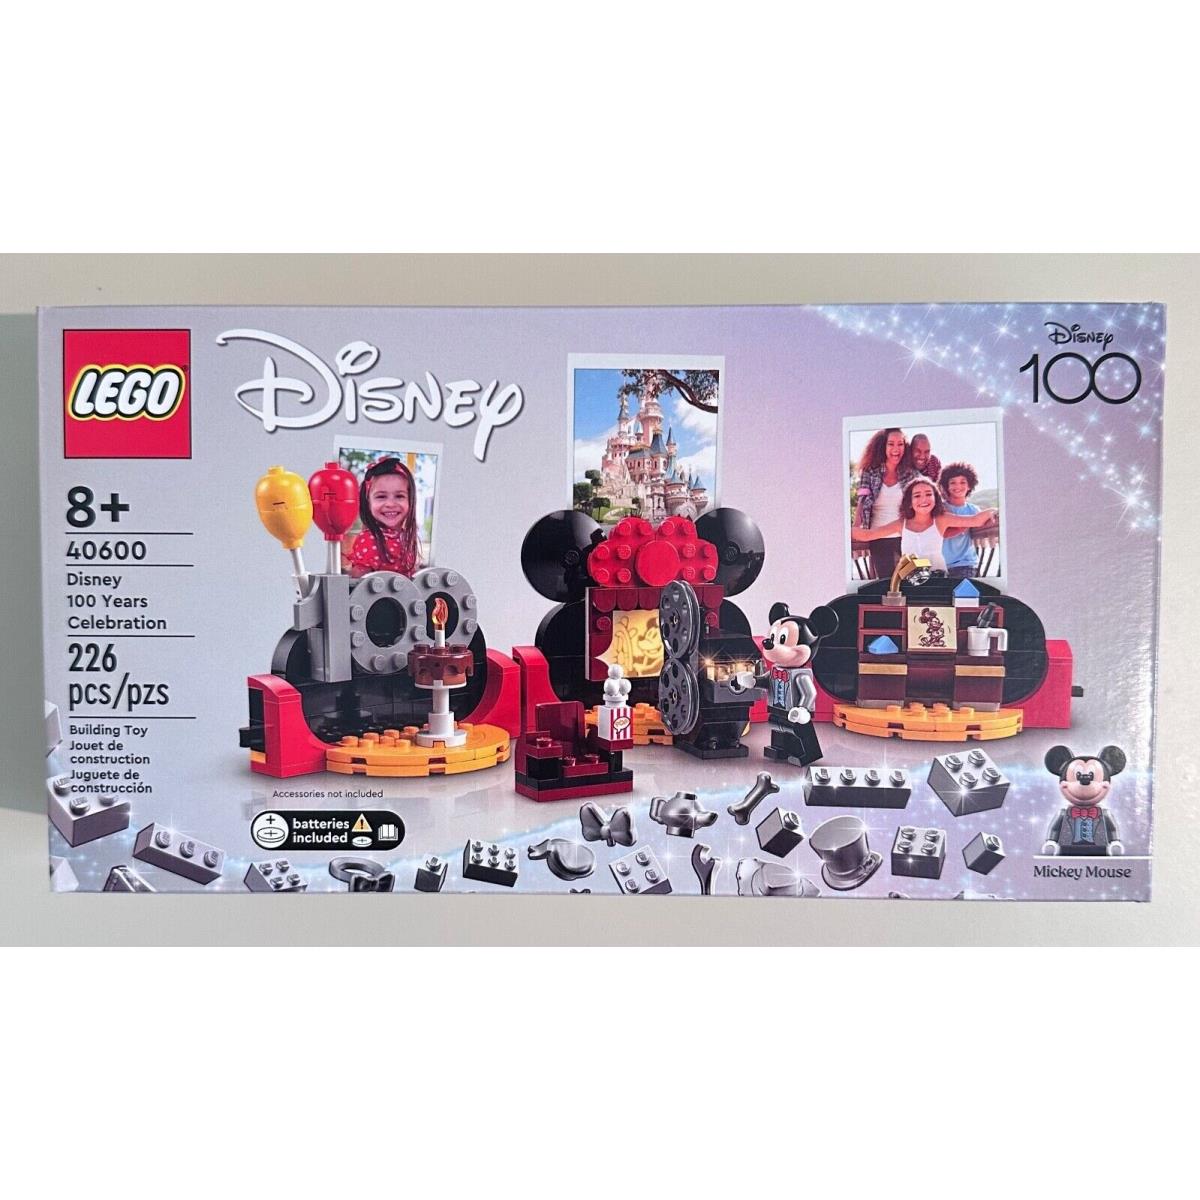 Lego 40600 Disney 100 Years Celebration 226 Pcs Building Kit Set 8+ Mickey Mouse